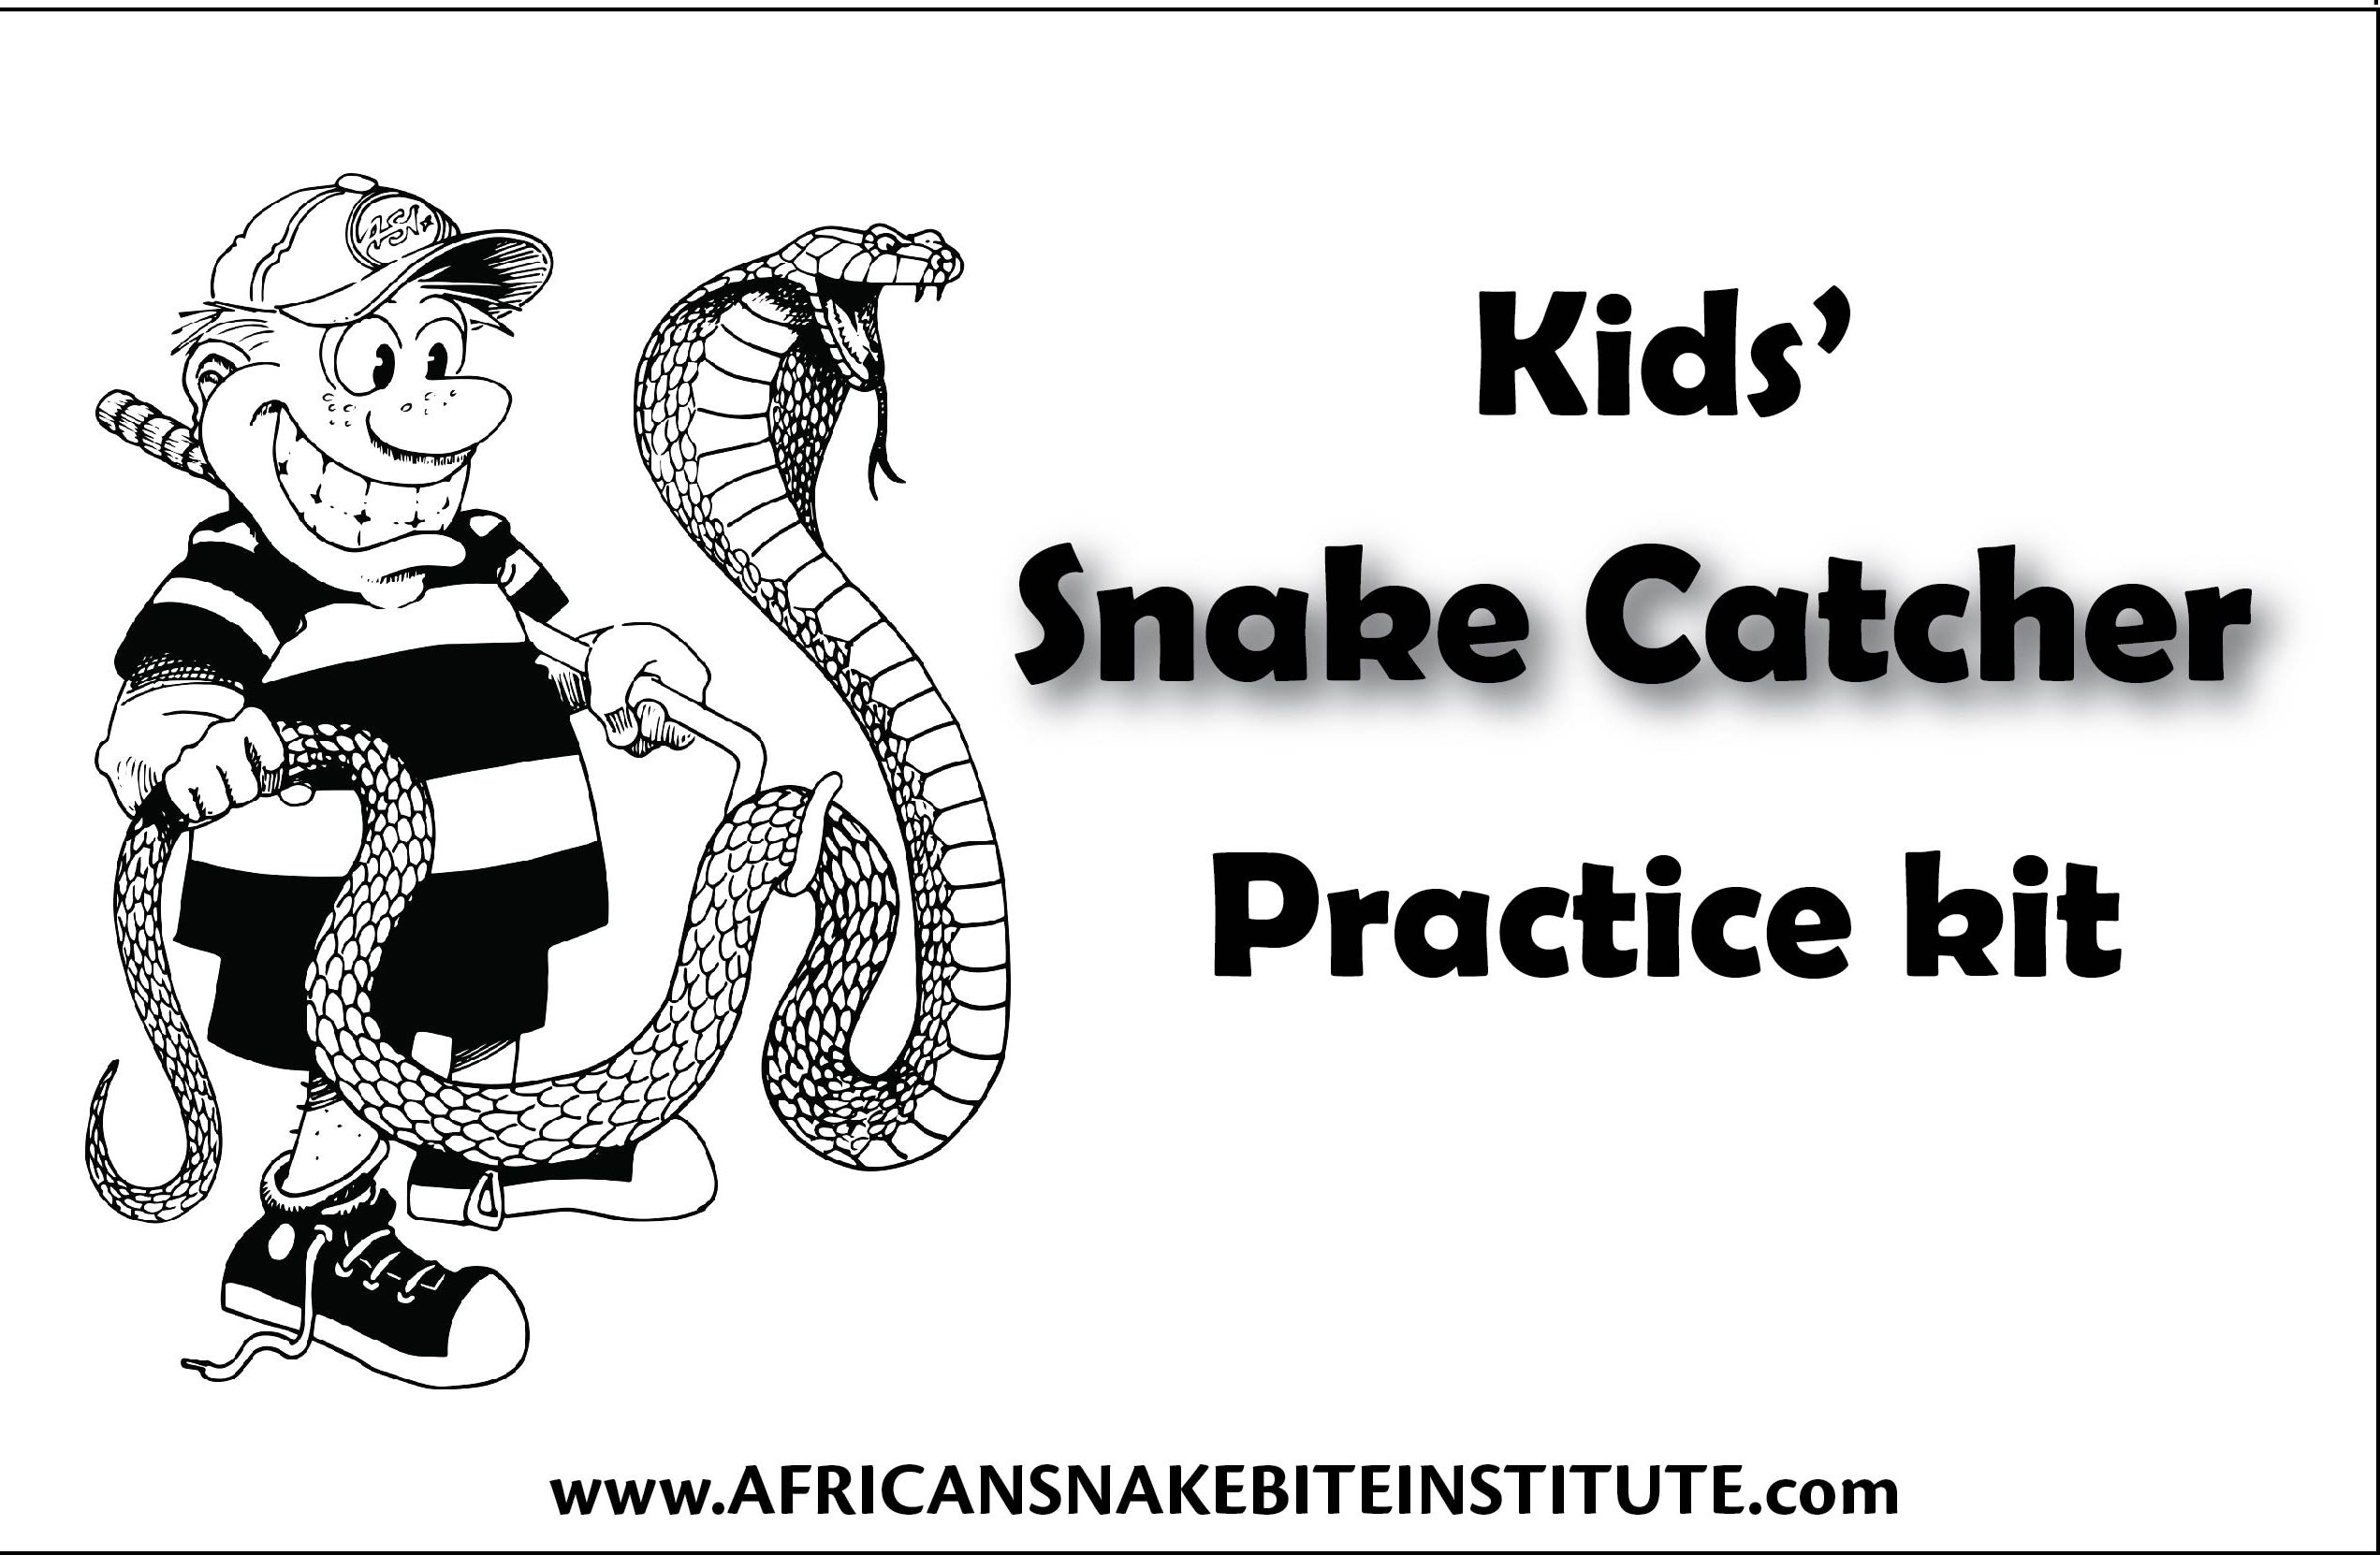 Cartoon Illustration: Continuous Sketch Snake Catcher Tools, Reptile  Handling Tools : Cartoon Snake Catcher Illustration, Snake Catcher  Equipment: Pliers, Tongs, Stick Cartoon Drawing - MasterBundles